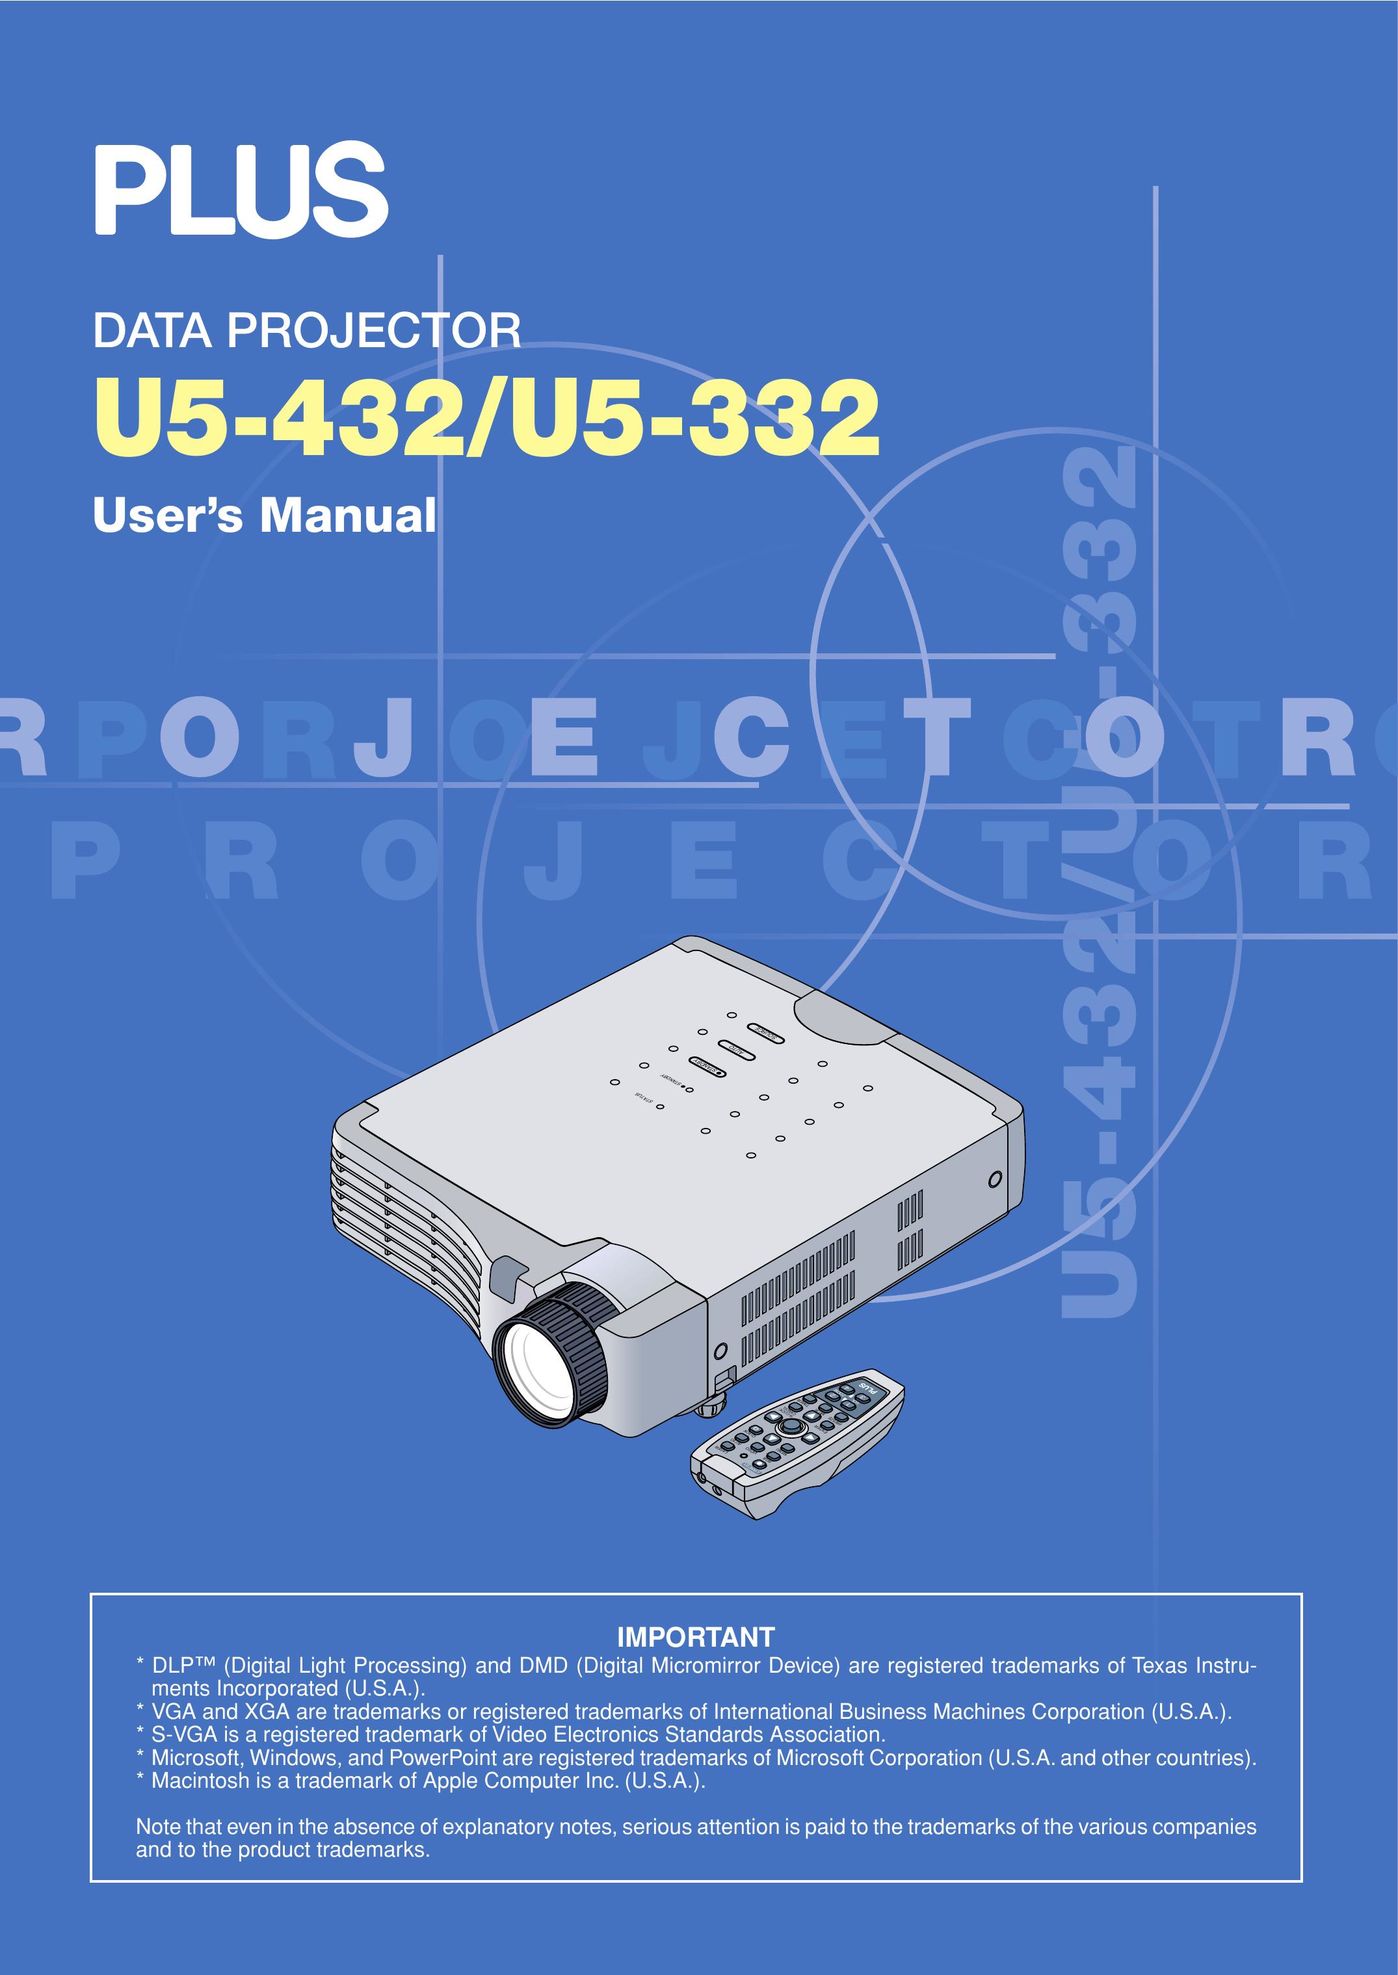 PLUS Vision U5-432 Projector User Manual